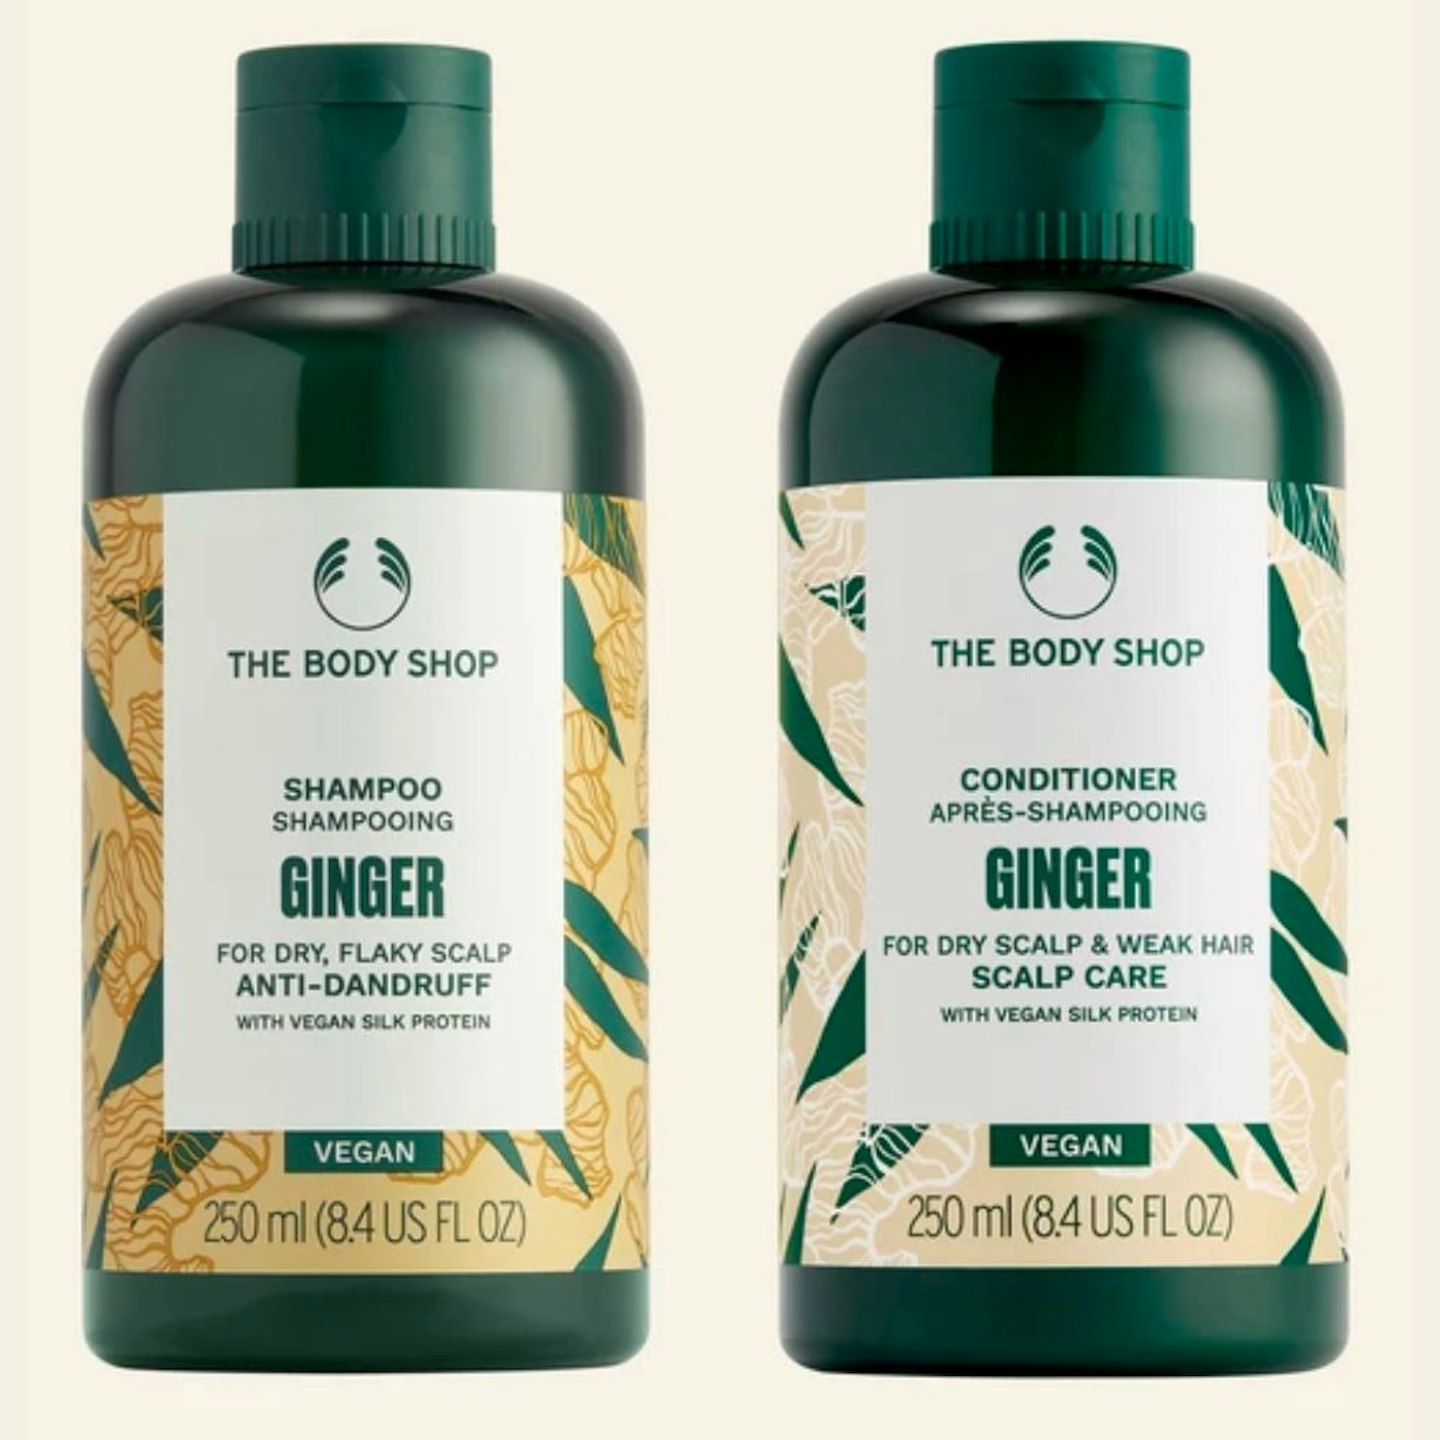 The Body Shop Ginger Anti-Dandruff Shampoo and Conditioner